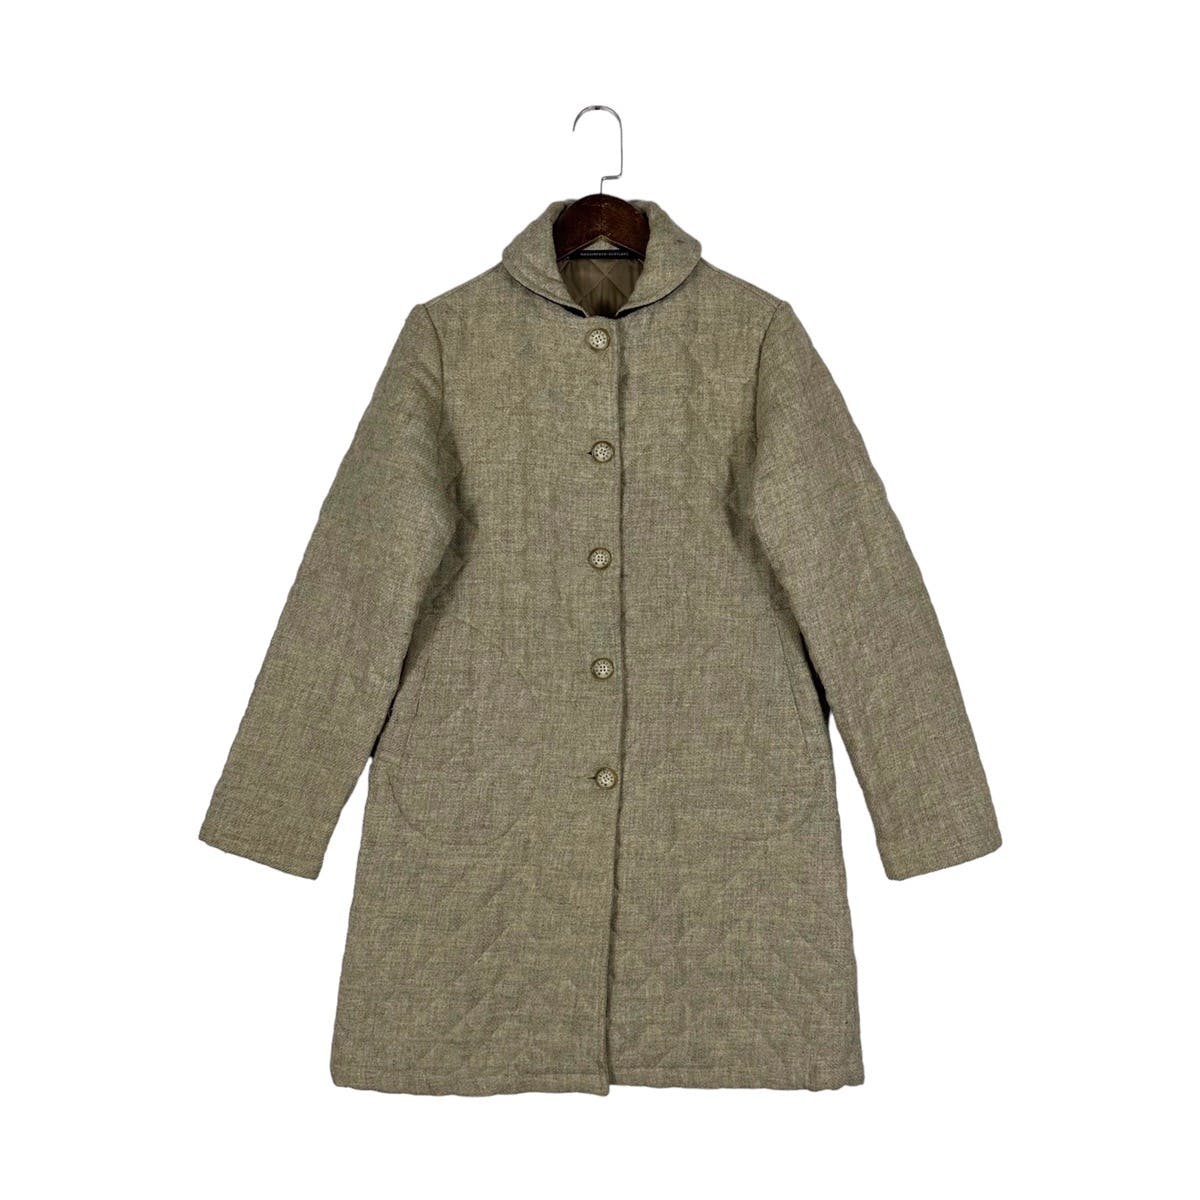 Mackintosh Quilted Beige Coat Jacket - 1